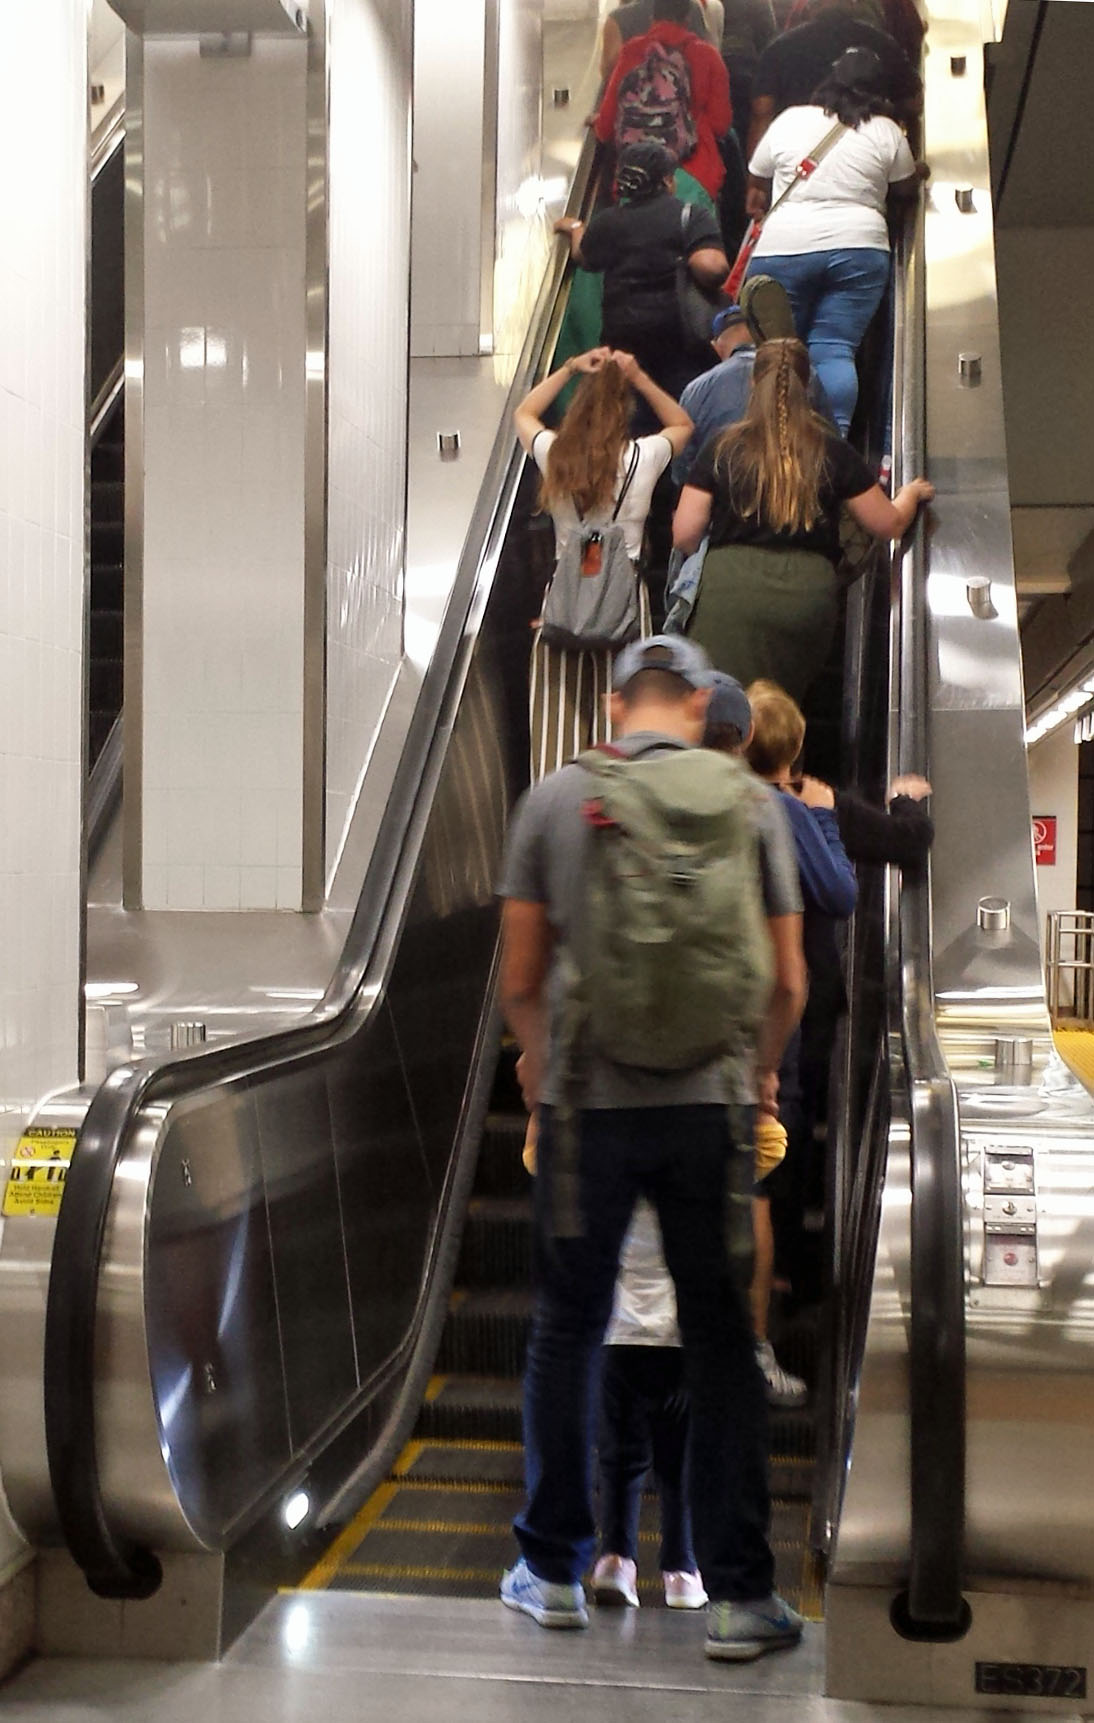 South Ferry station south escalator